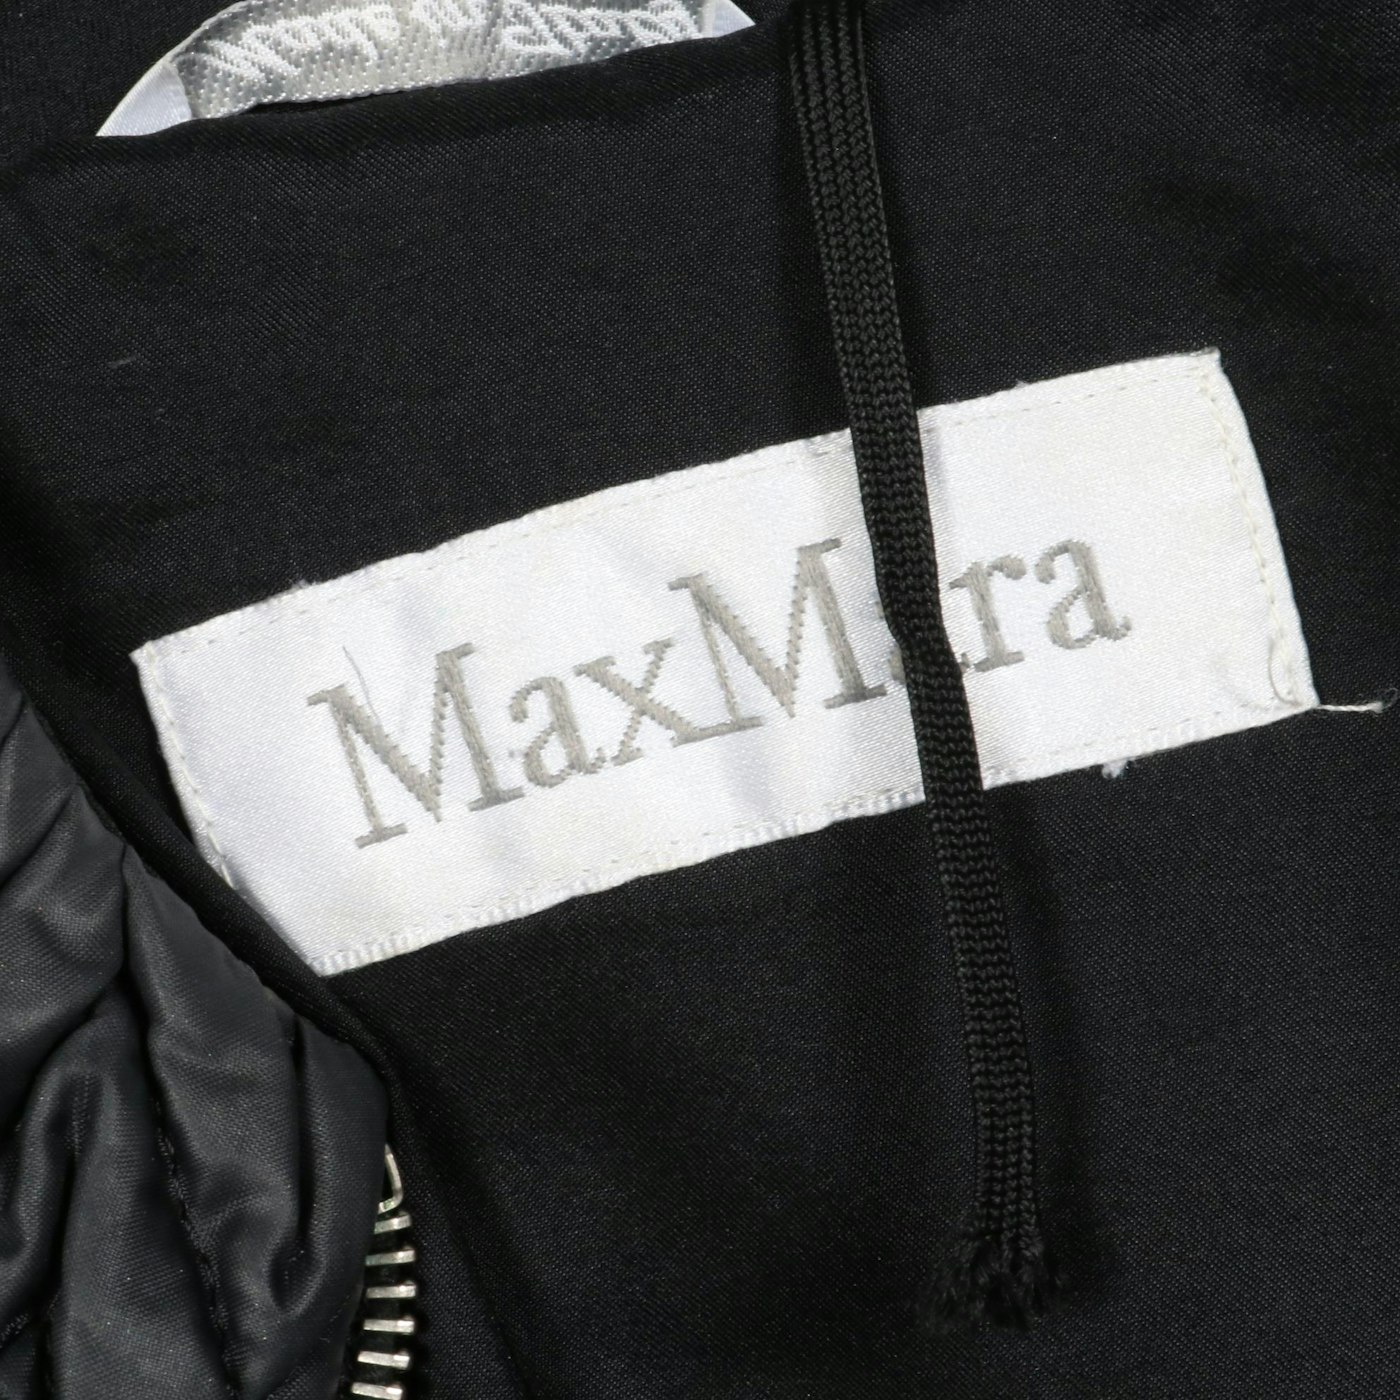 Max Mara Matelassé Stroller Coat and Piazza Sempione Denim Coat | EBTH